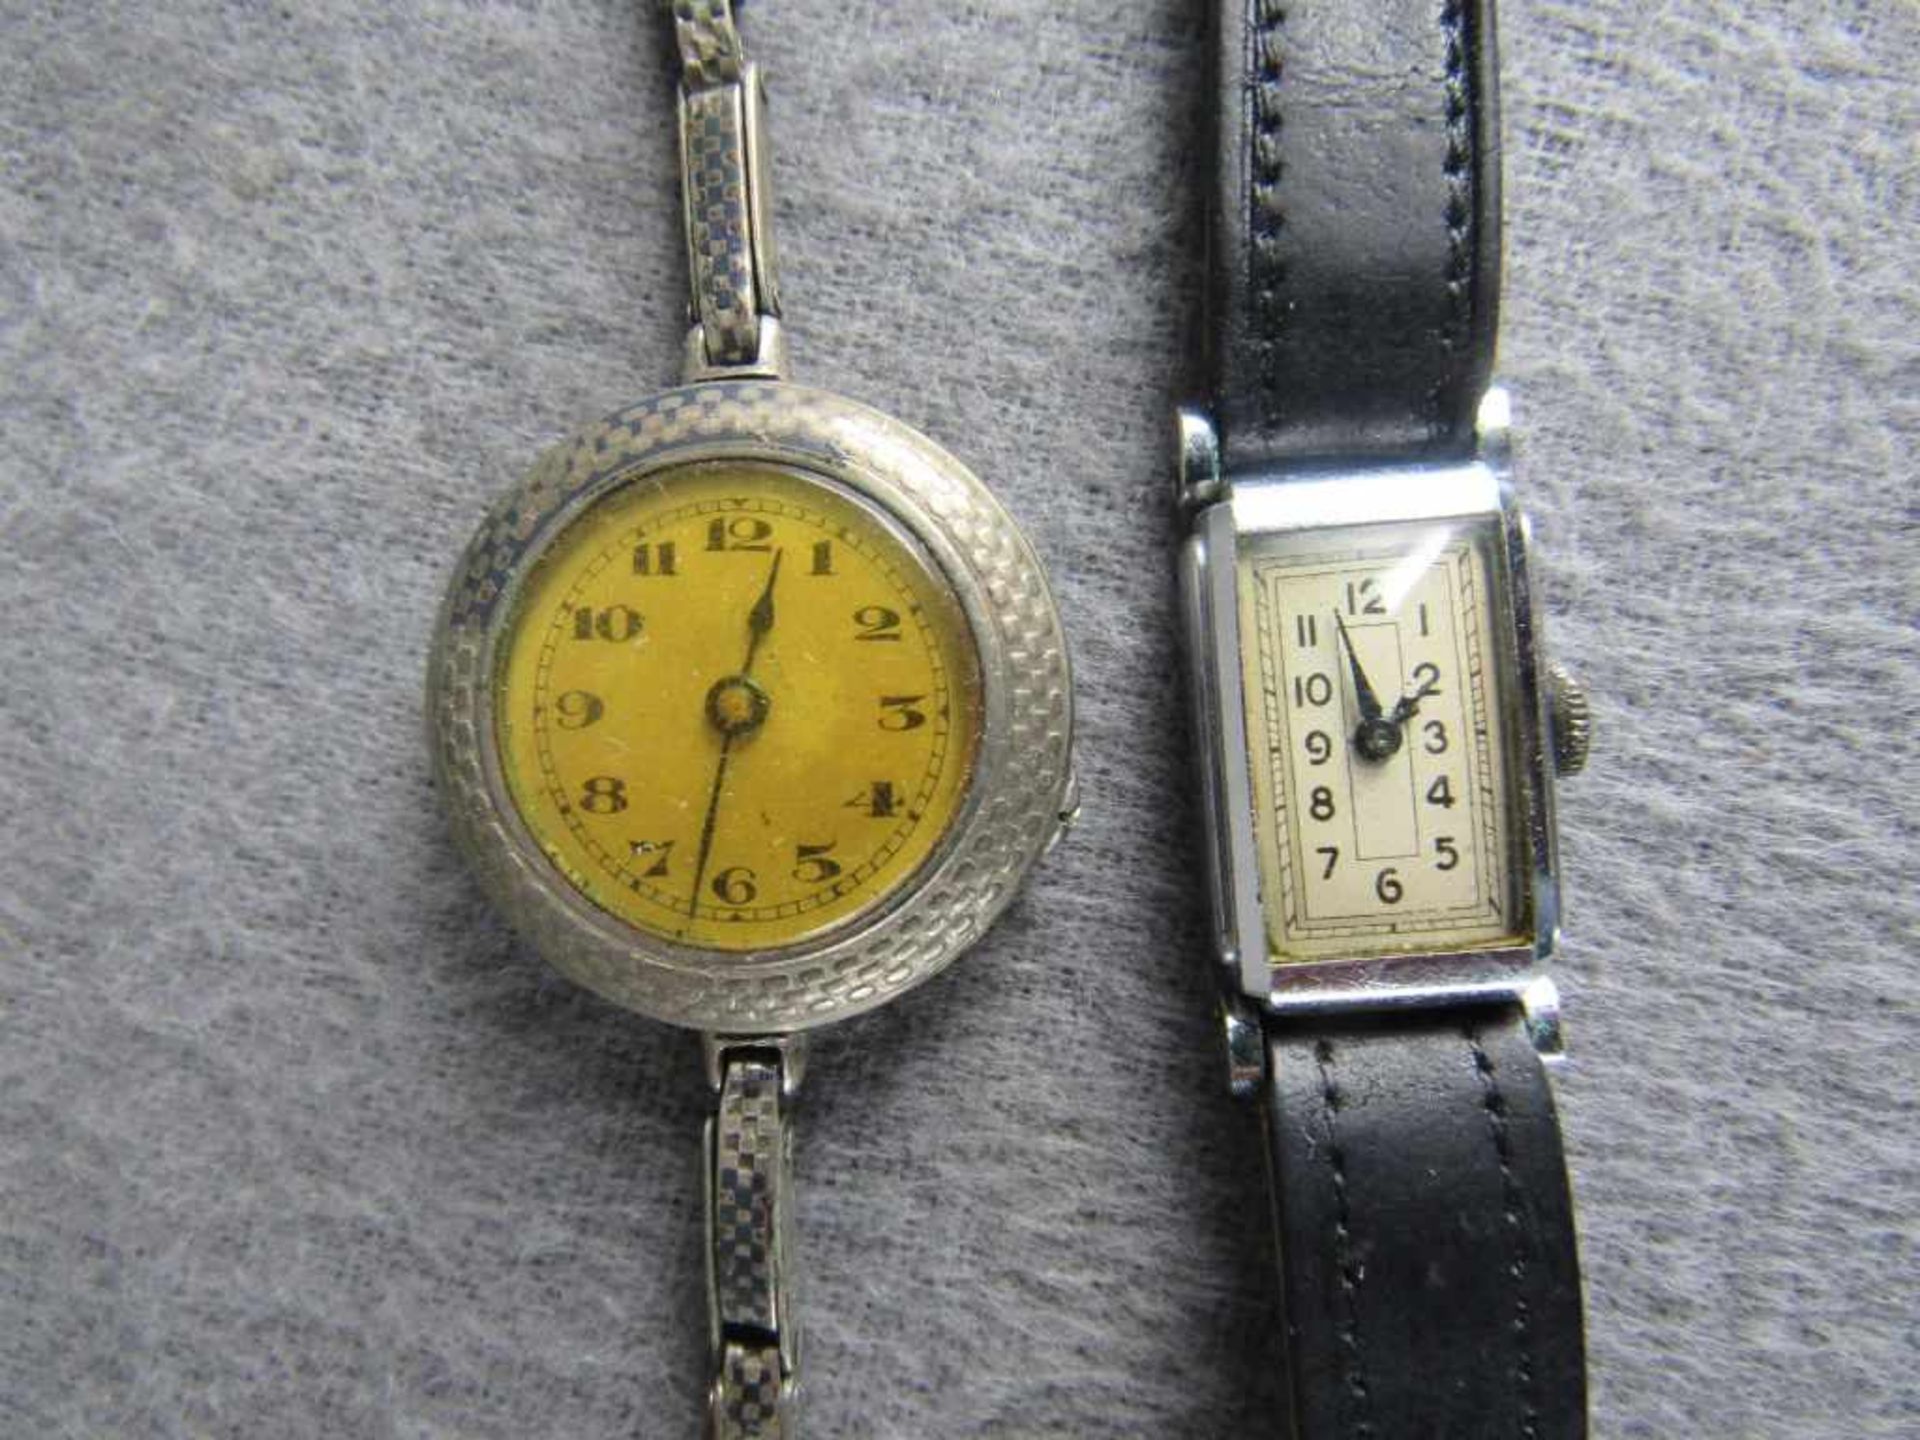 Zwei antike Armbanduhren in Schatulle- - -20.00 % buyer's premium on the hammer price19.00 % VAT - Image 2 of 3